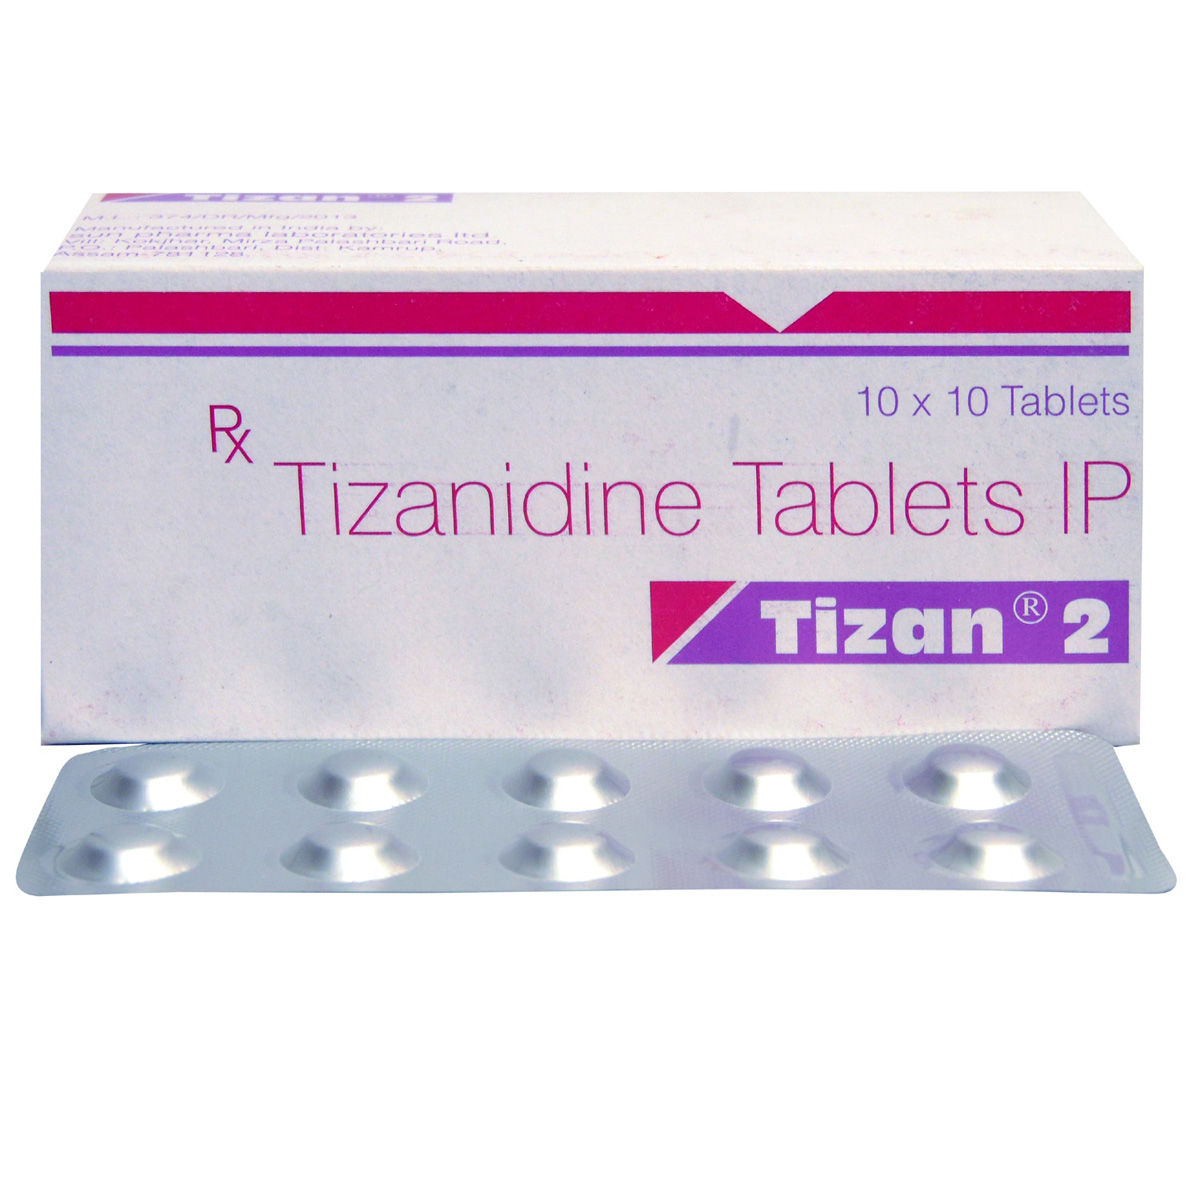 Buy Tizan 2 Tablet 10's Online